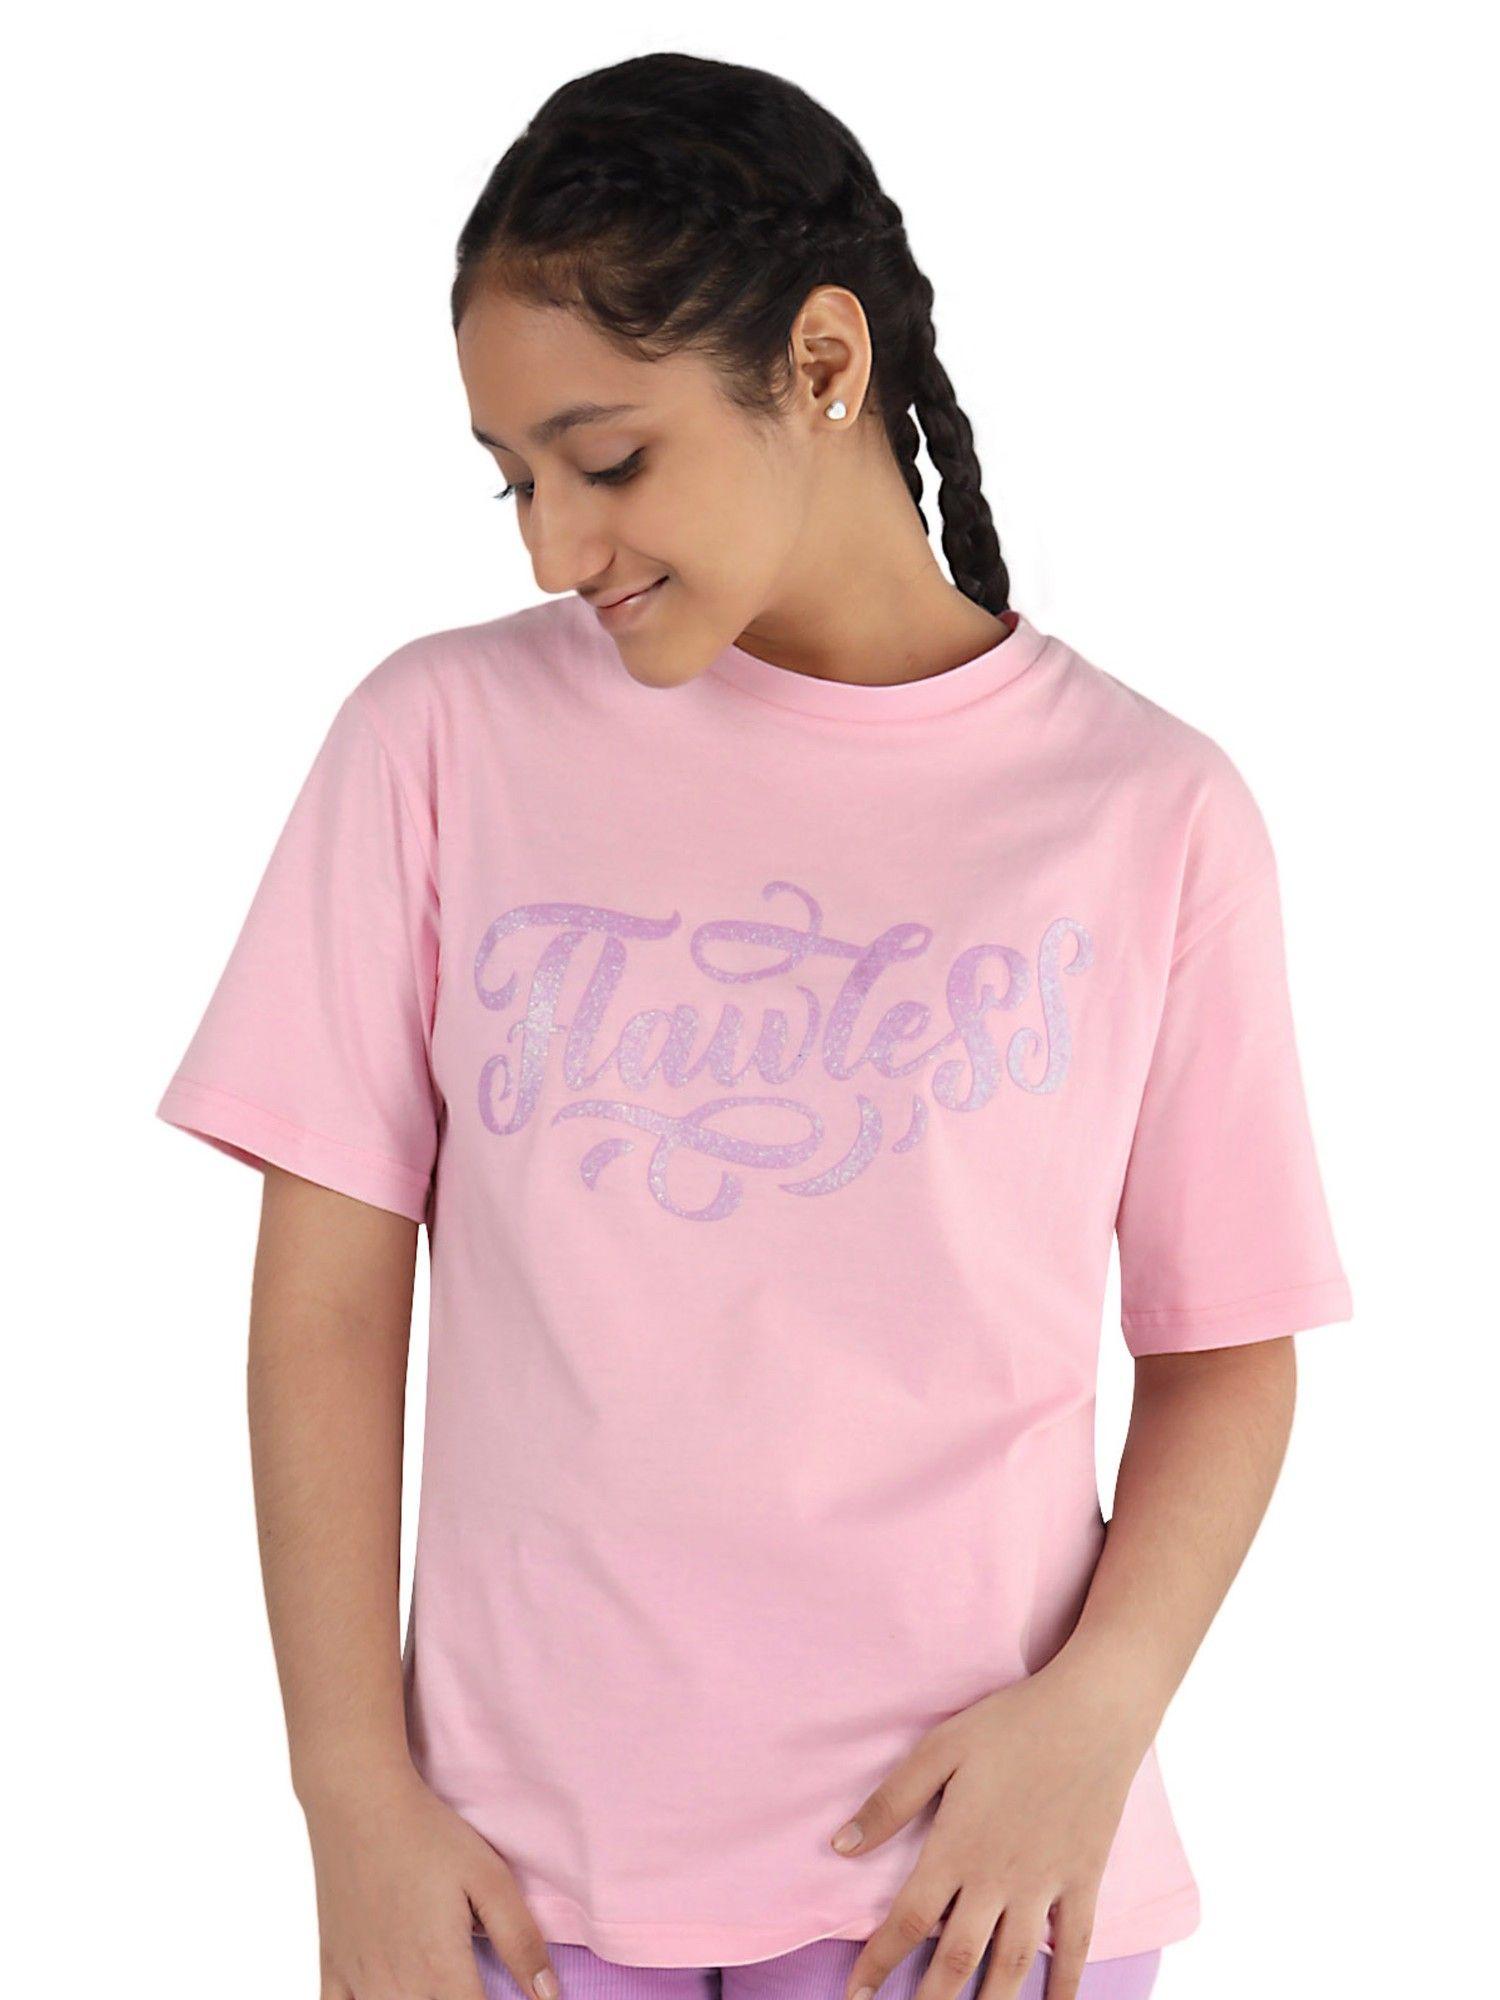 girls-pink-t-shirt-typography